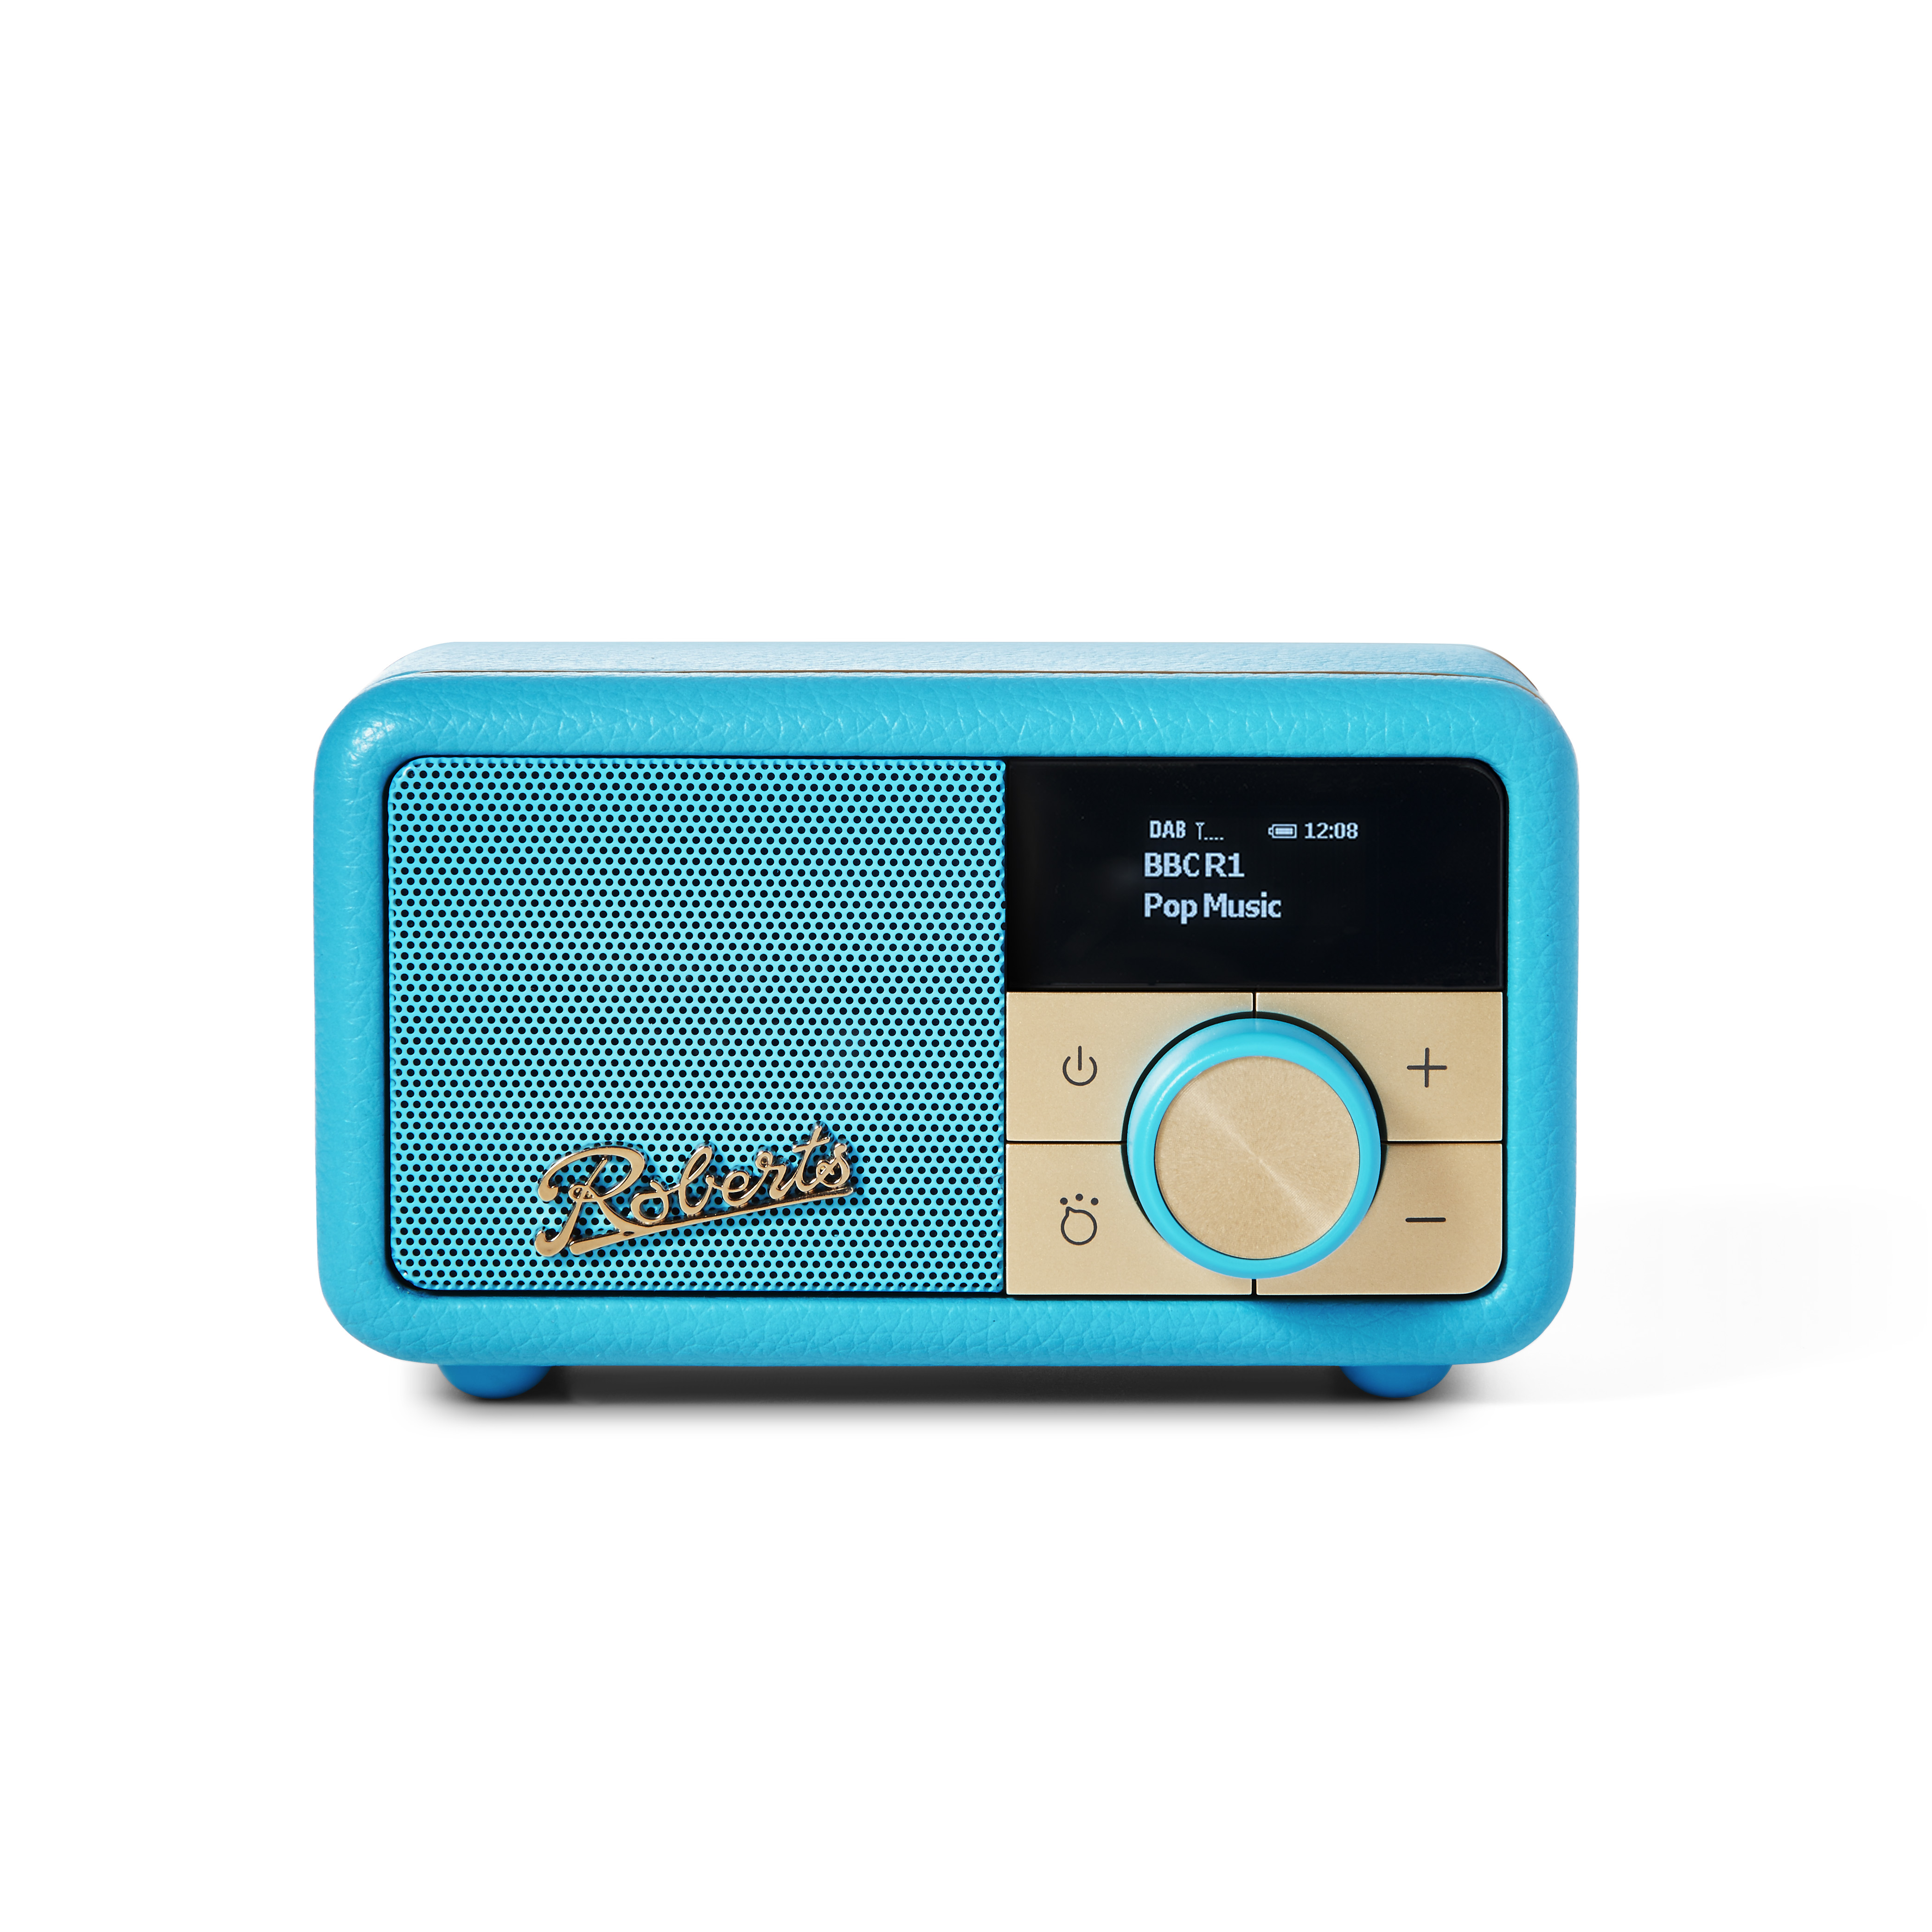 Revival / und tragbares ROBERTS Petite integriertem Digitalradio, FM | | blue Akku Blau DAB+, Radio electric Bluetooth mit RADIO DAB+